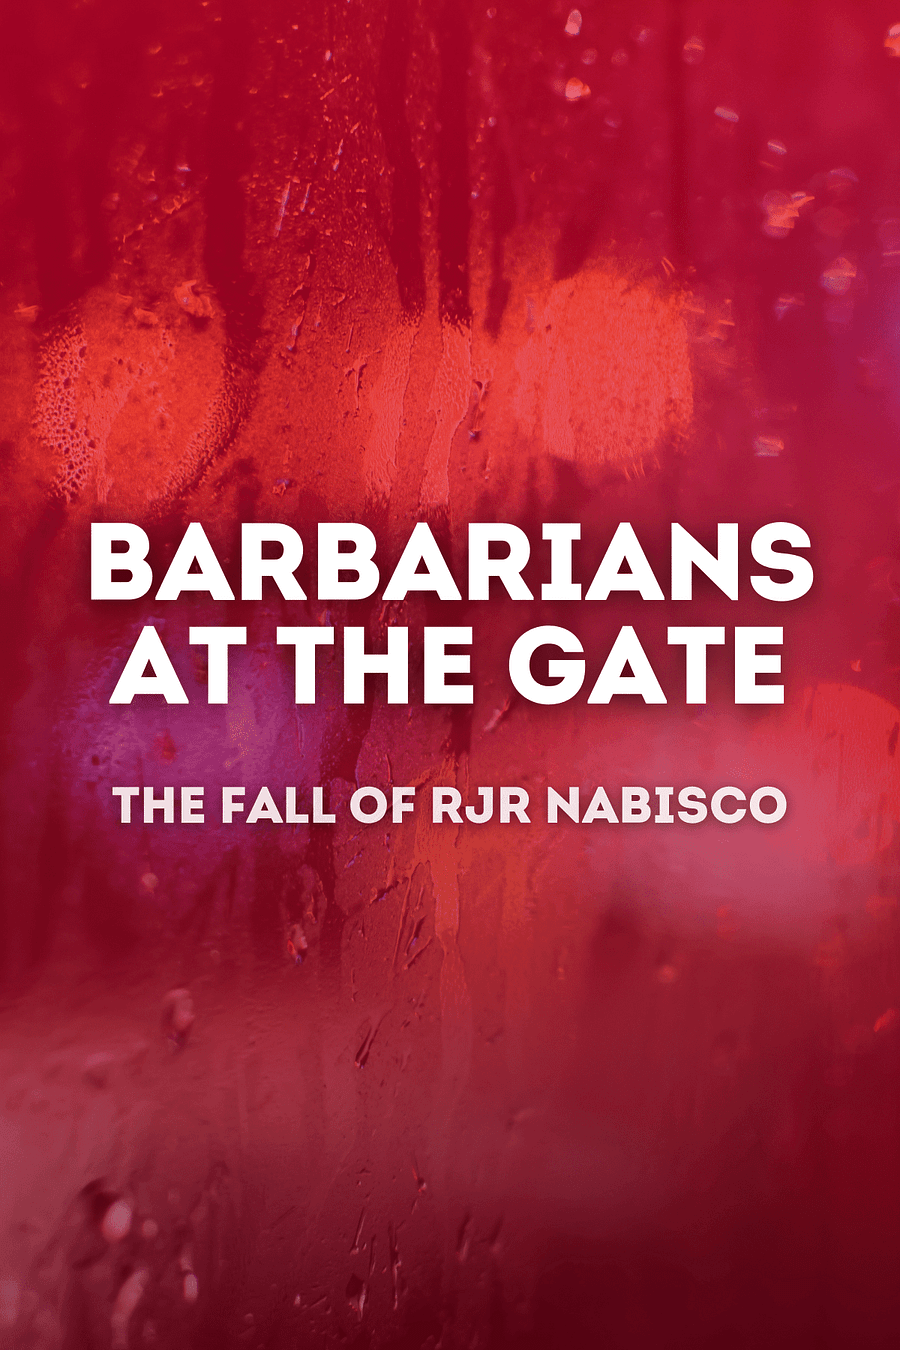 Barbarians at the Gate by Bryan Burrough, John Helyar - Book Summary